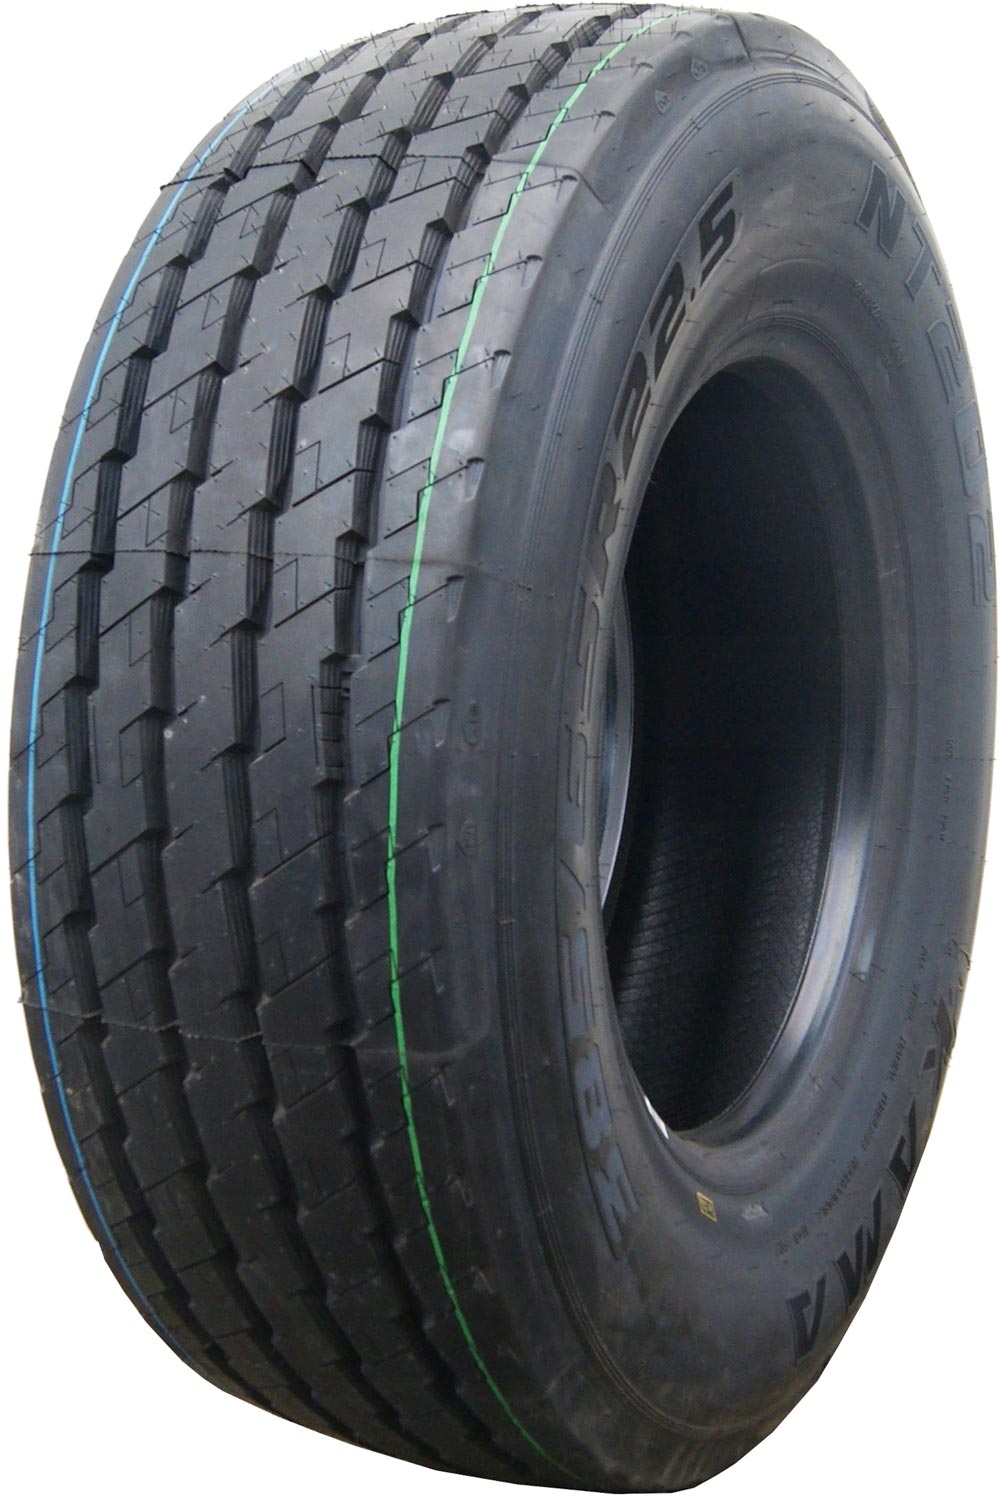 product_type-heavy_tires KAMA NT202 215/75 R17.5 135J